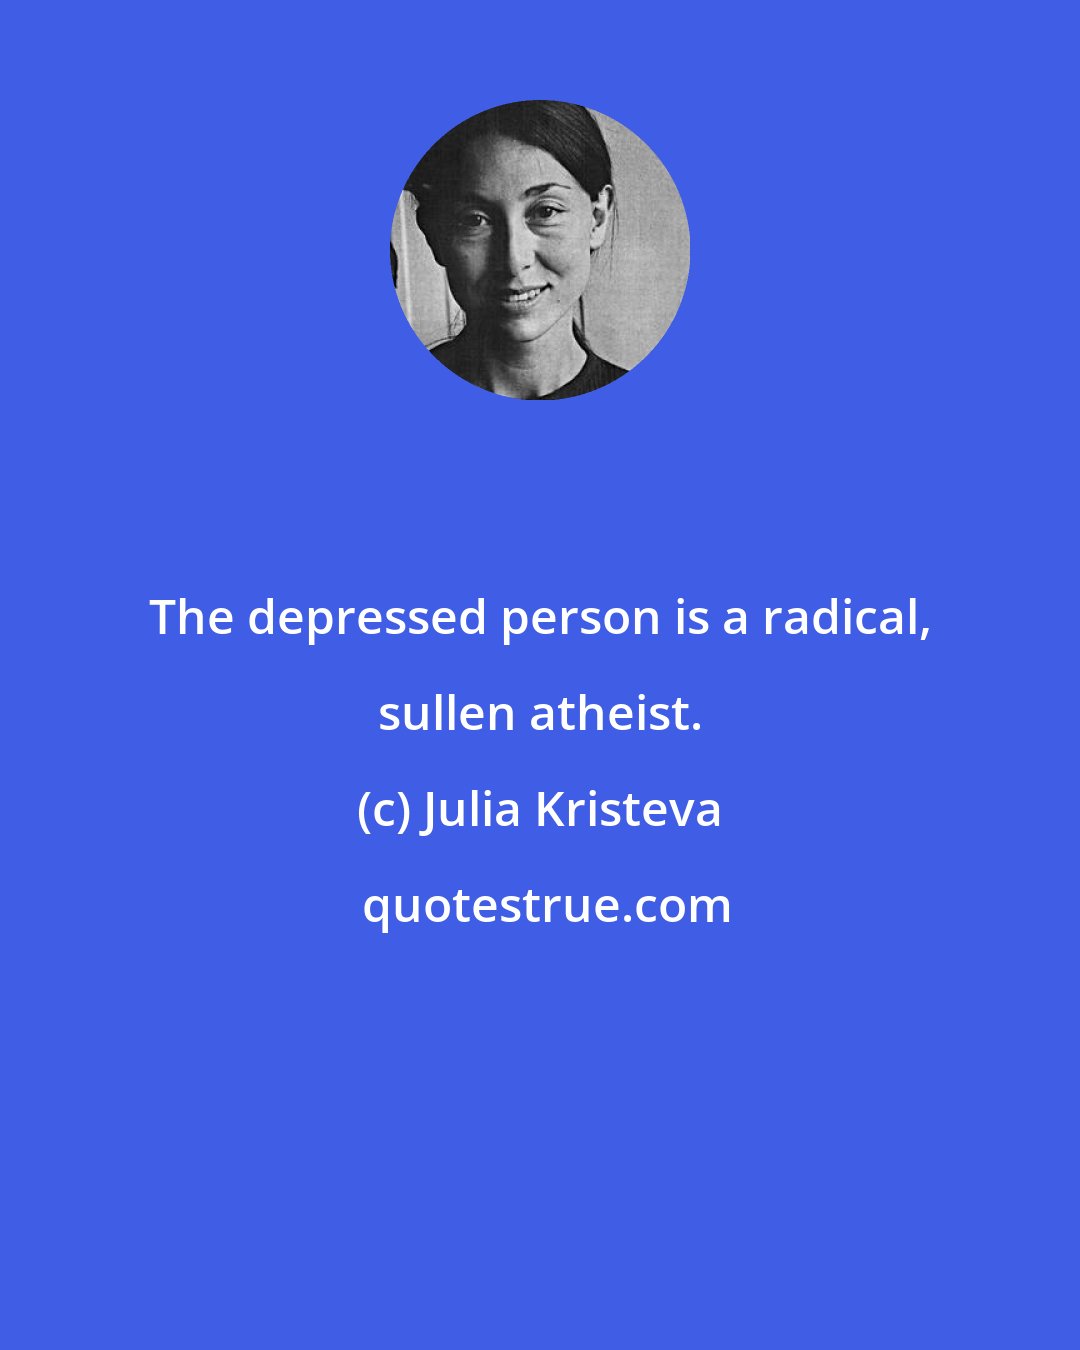 Julia Kristeva: The depressed person is a radical, sullen atheist.